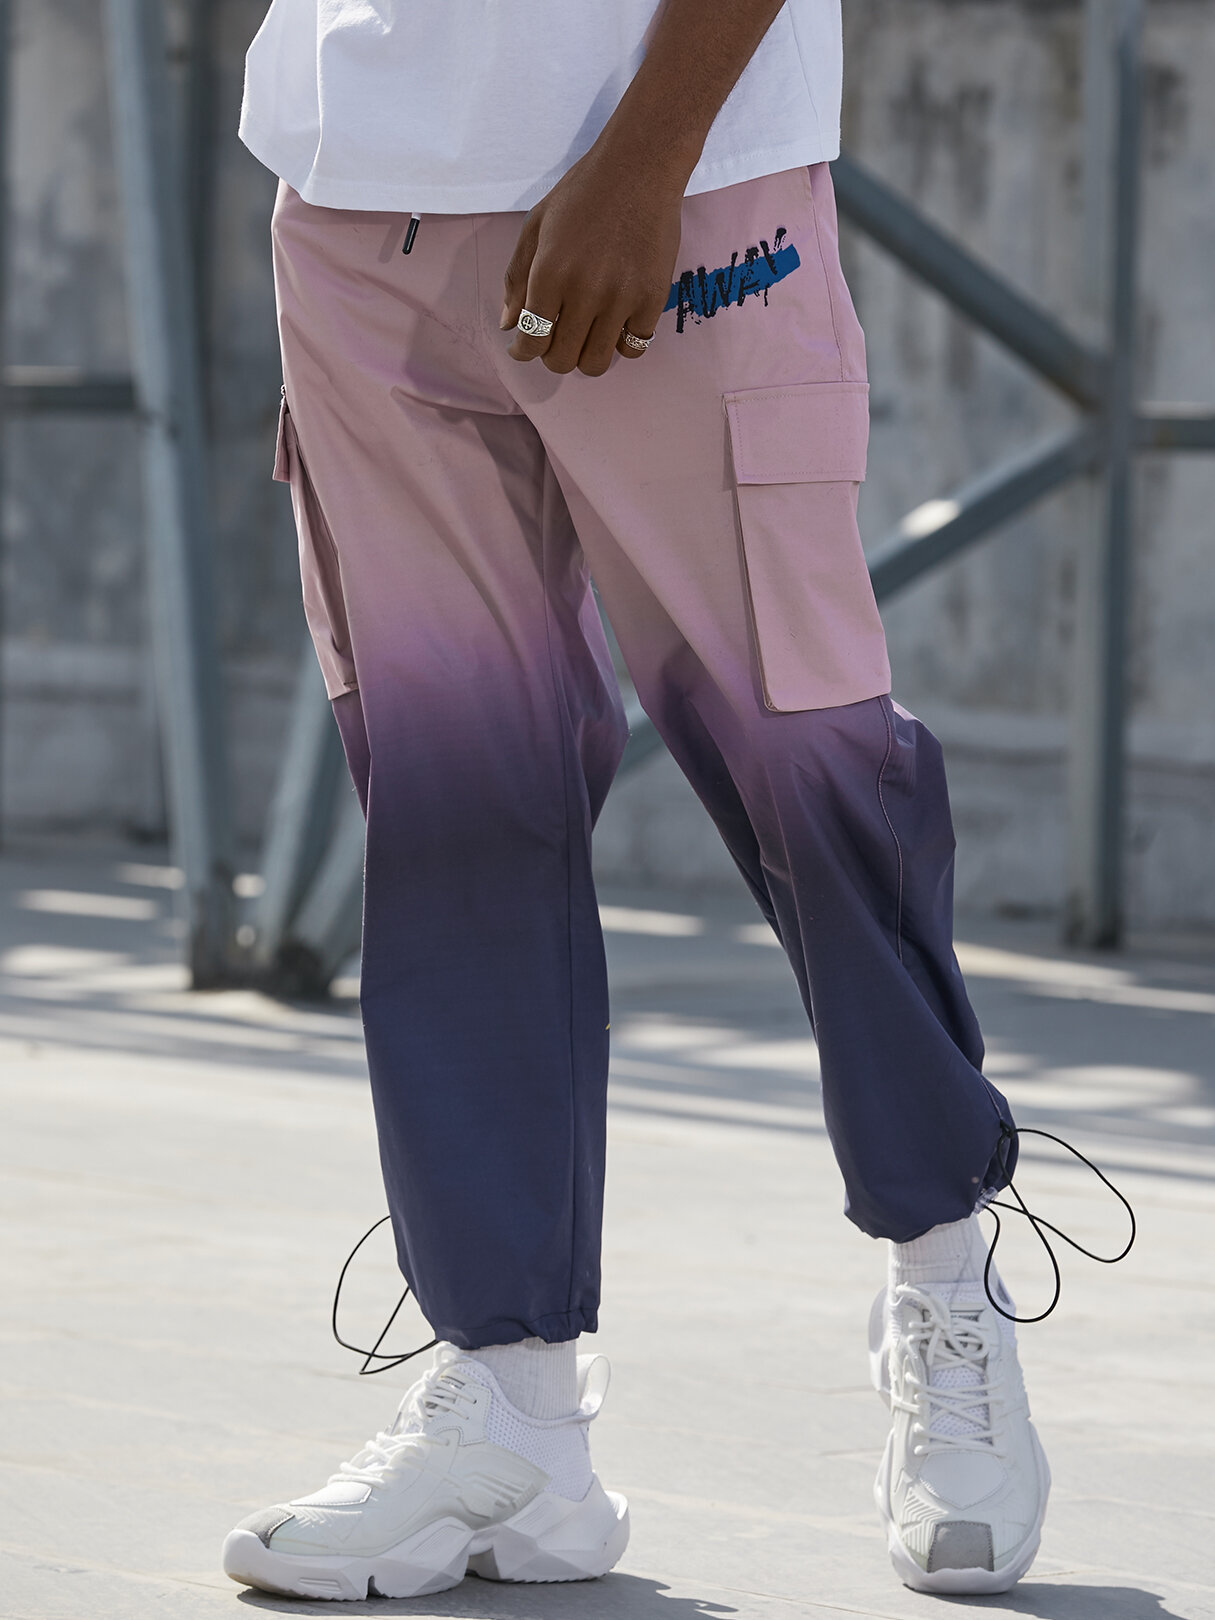 

KOYYE Men Fashion Hip Hop Gradient Letter Print Casual Cargo Pants SKUG77551, Pink;blue